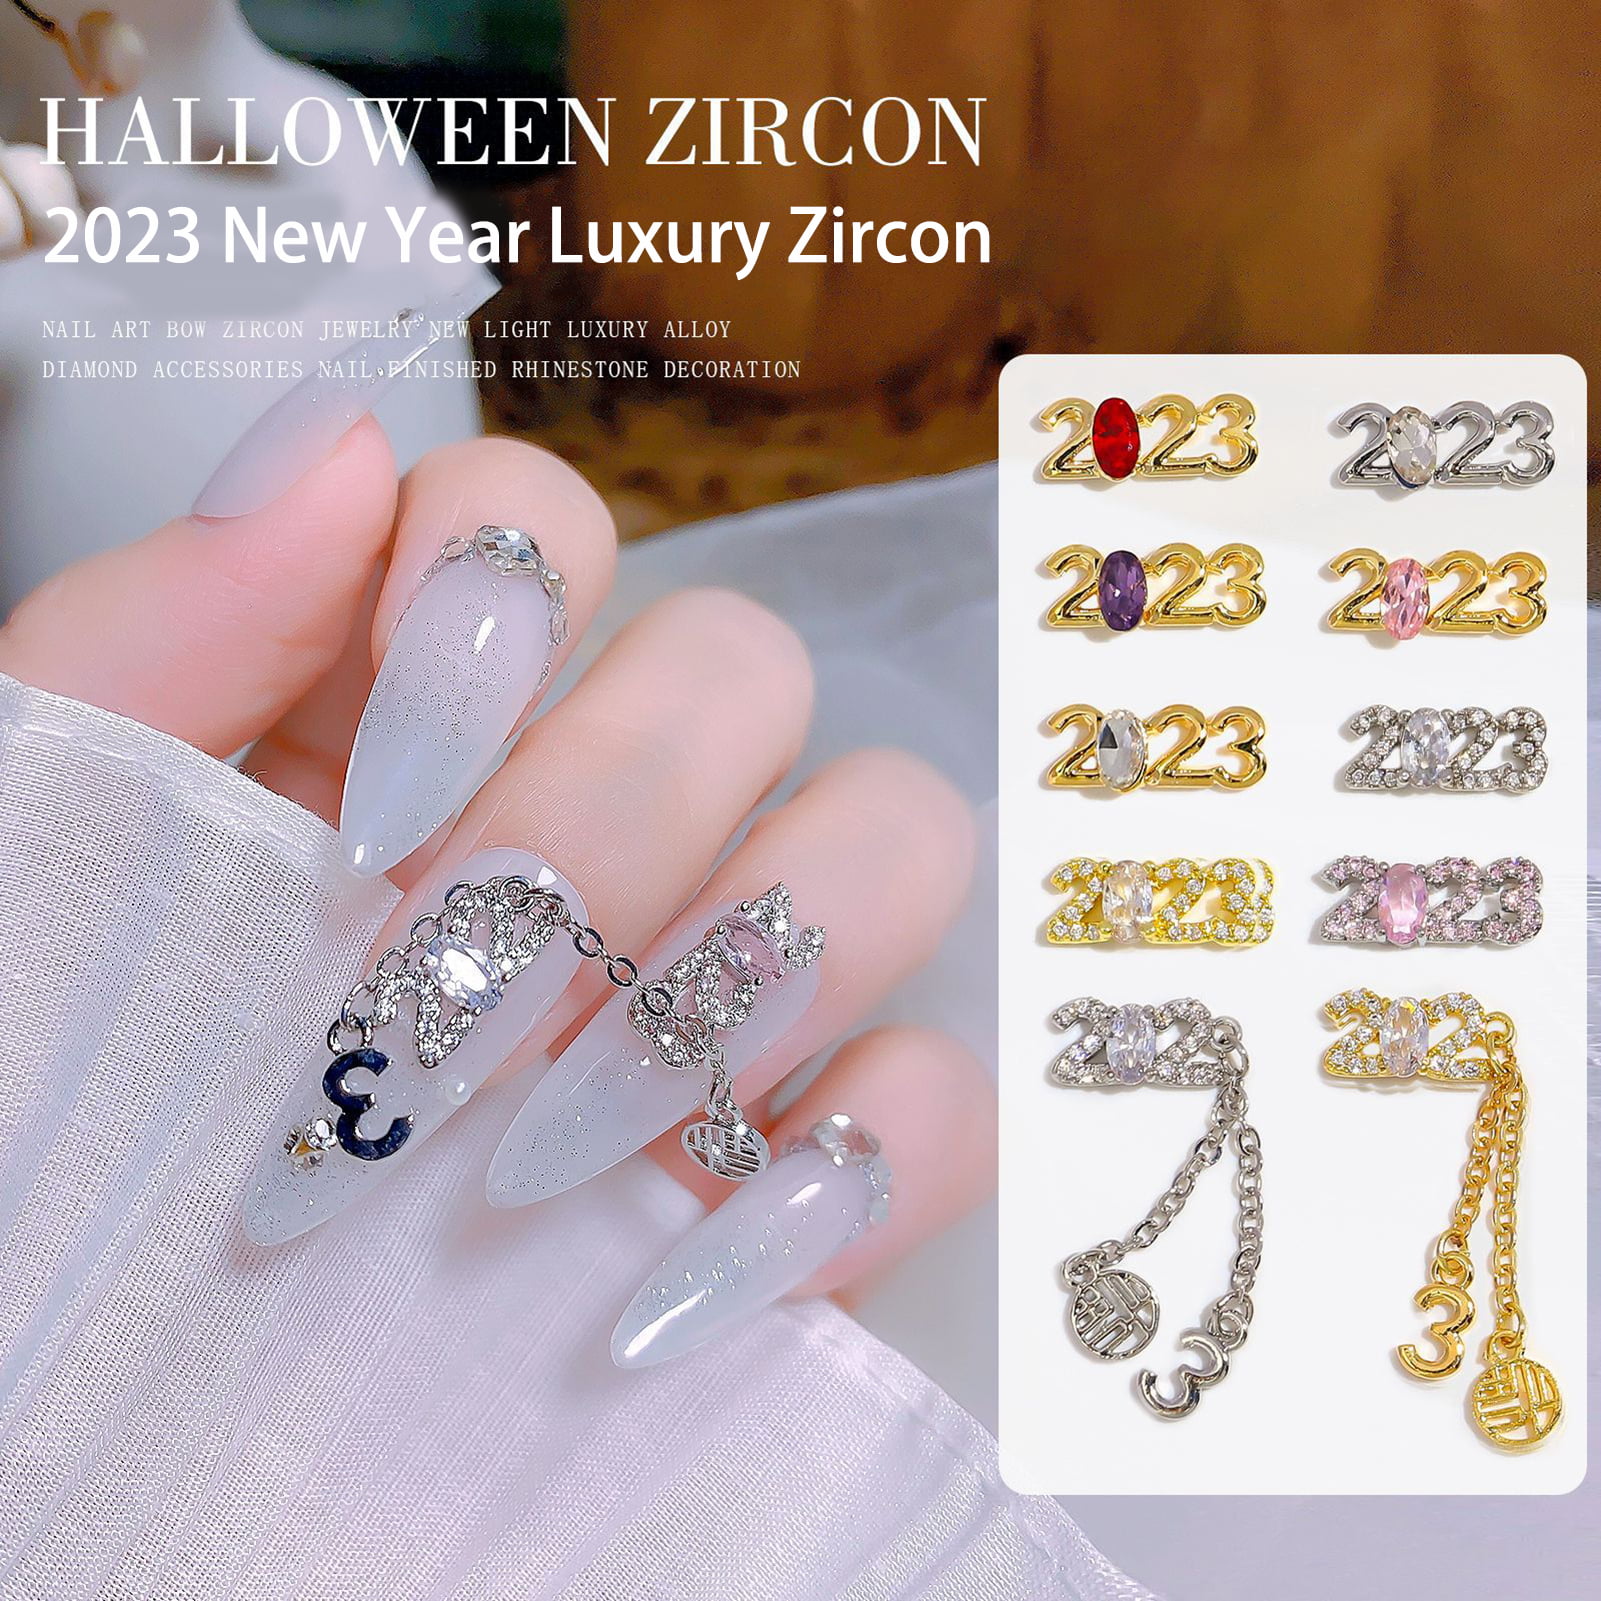 3D Zircon Circle Design Chanel Nail Charm, FoxyPhoenixNailArt in 2023